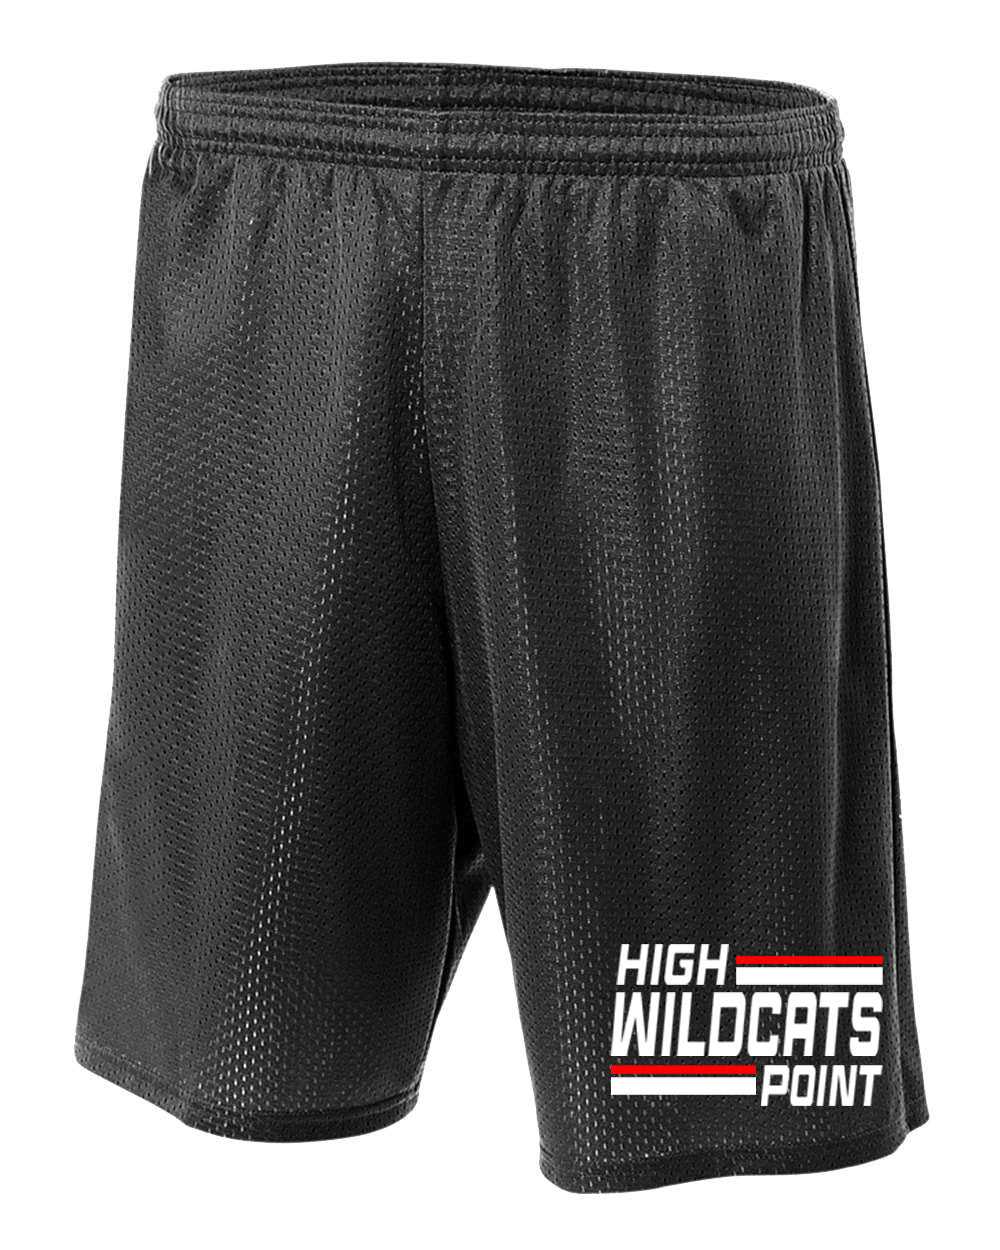 Wildcats Cheer Design 4 Mesh Shorts